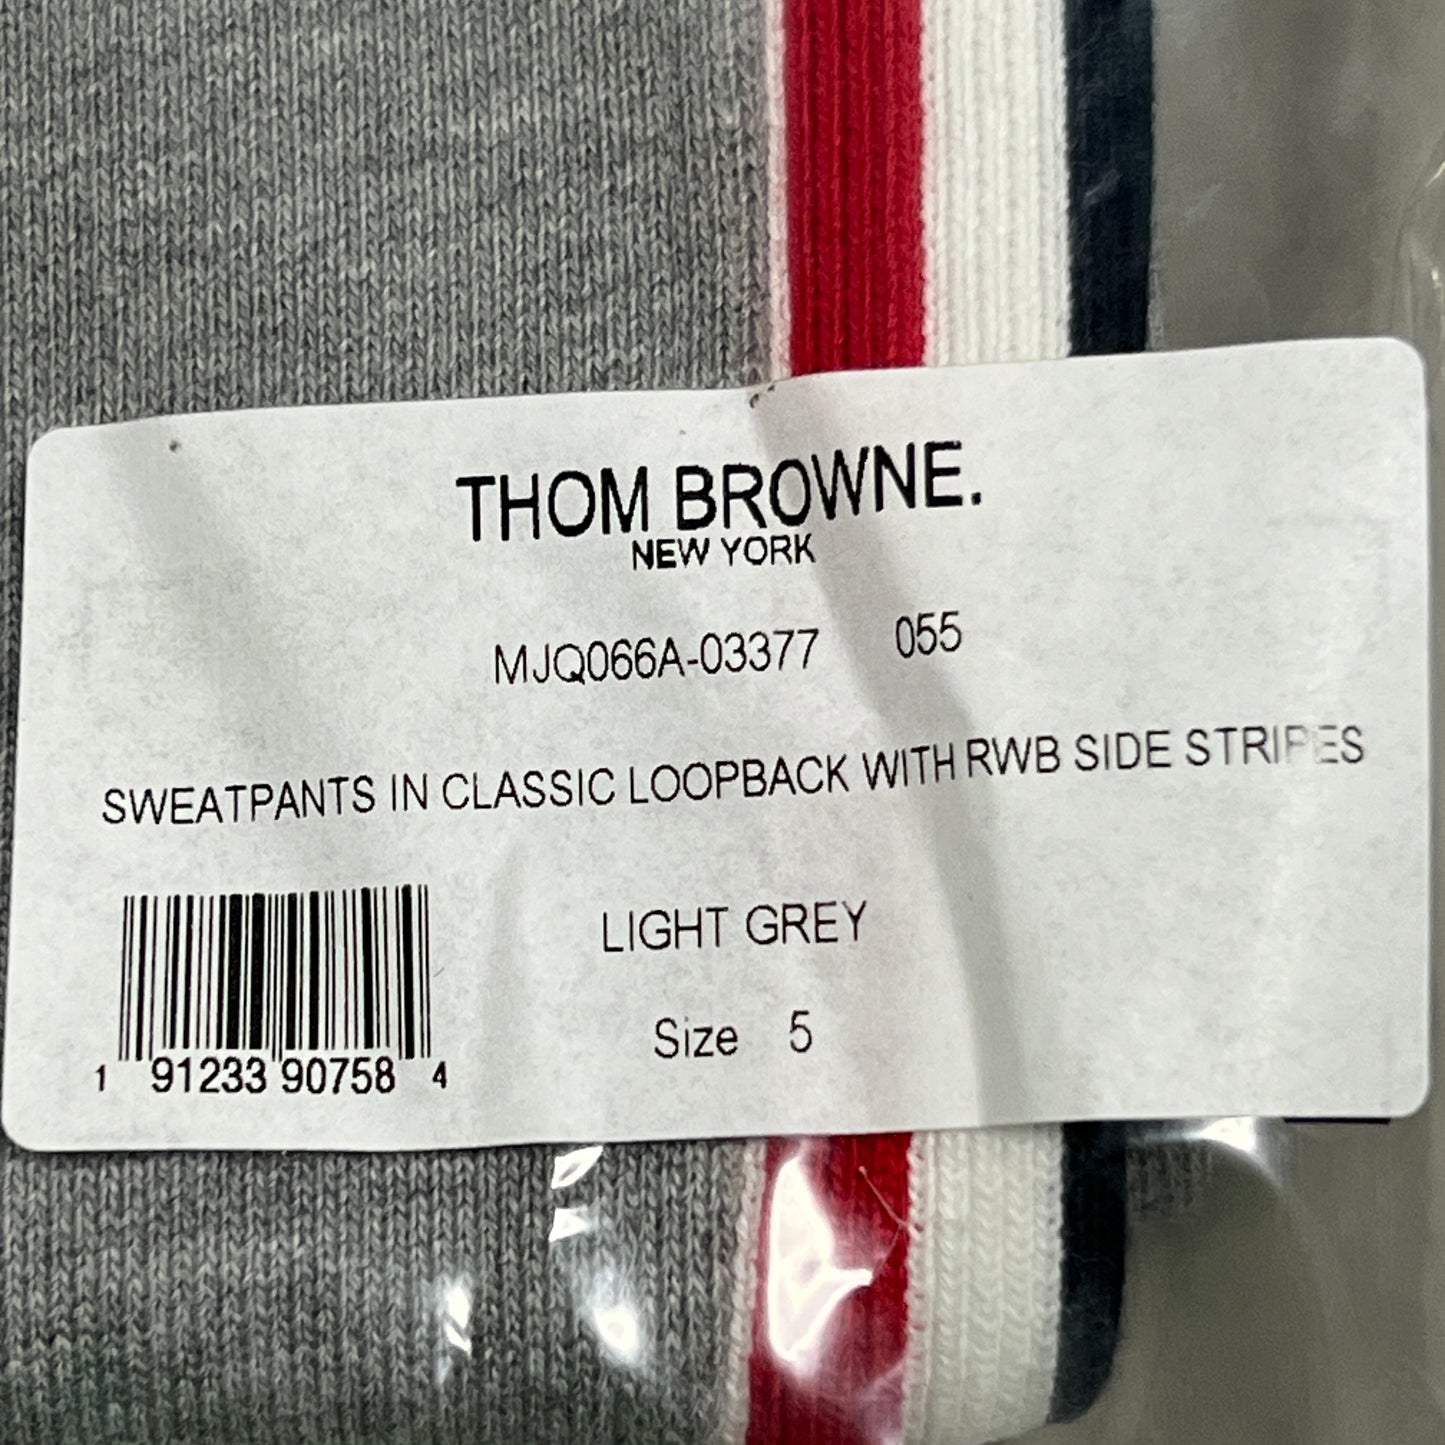 THOM BROWNE Sweat Pants in Classic LoopBack w/RWB Side Stripes Light Grey Size 5 (New)